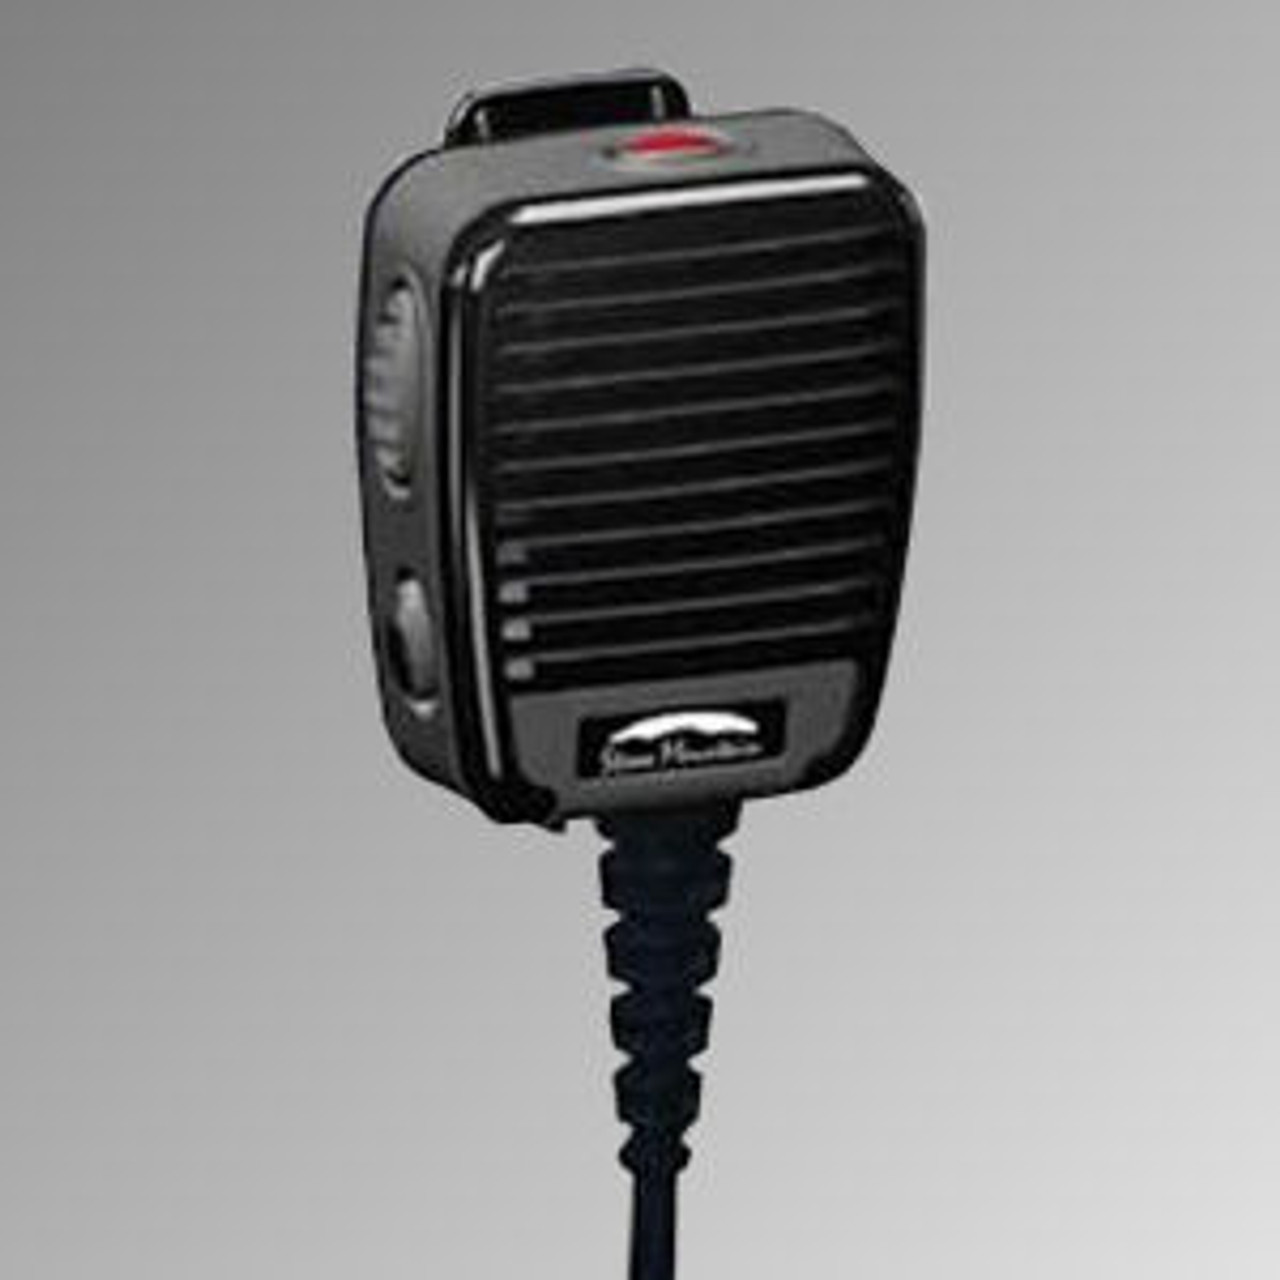 Harris P5550 Call Recording Ruggedized Waterproof IP68 Speaker Mic